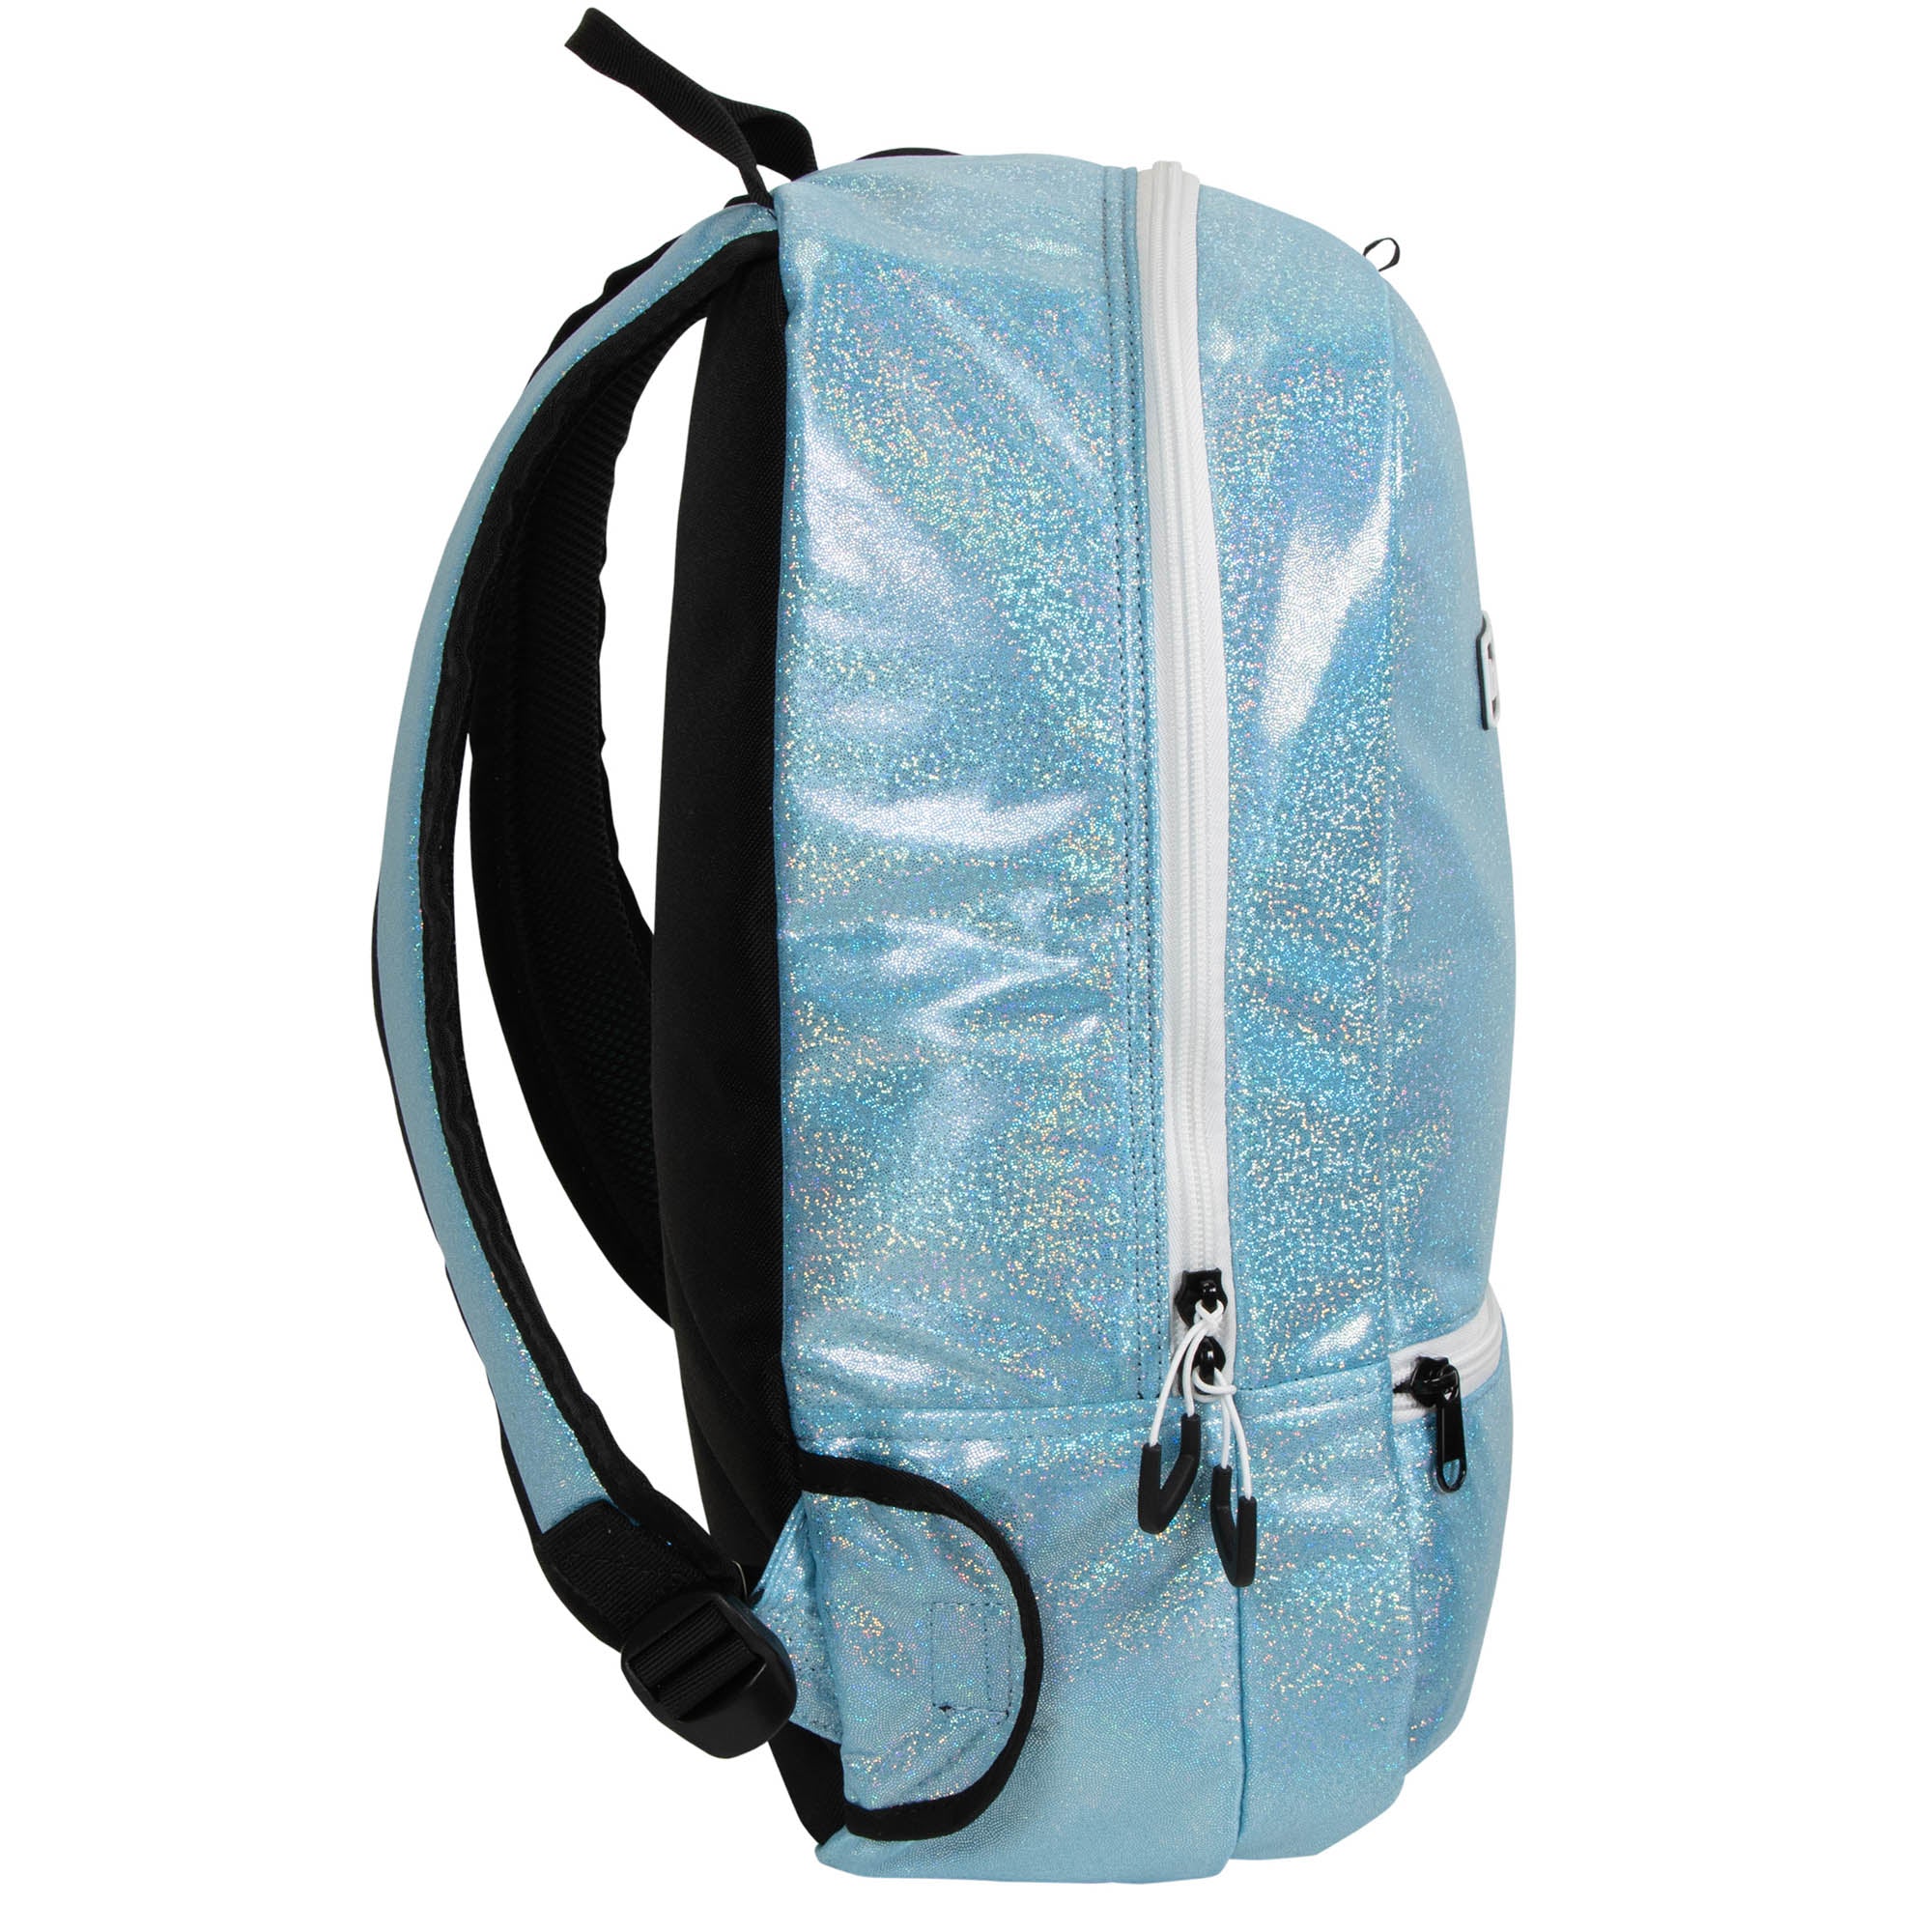 Brabo Fun Sparkle Backpack 23'24 